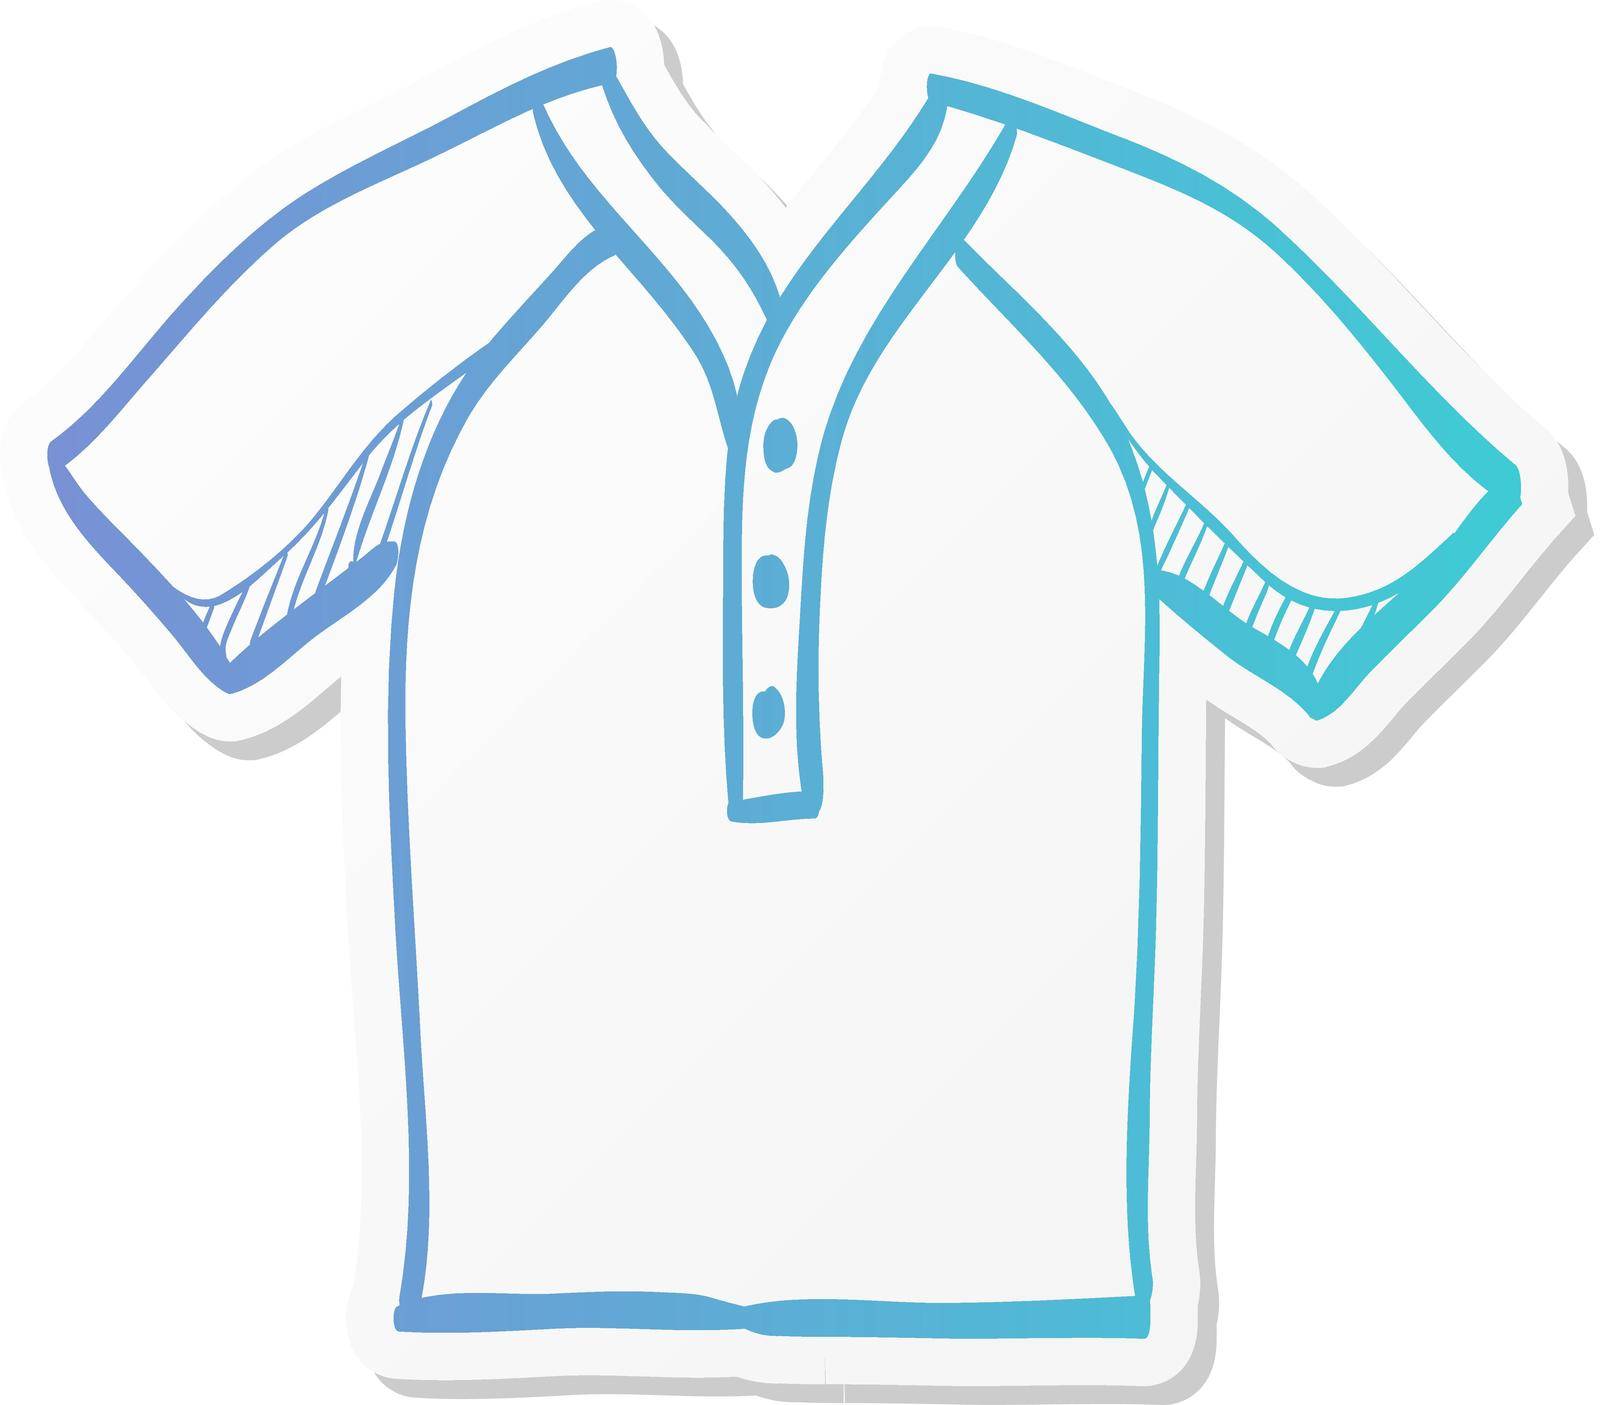 Sticker style icon - Baseball jersey by puruan